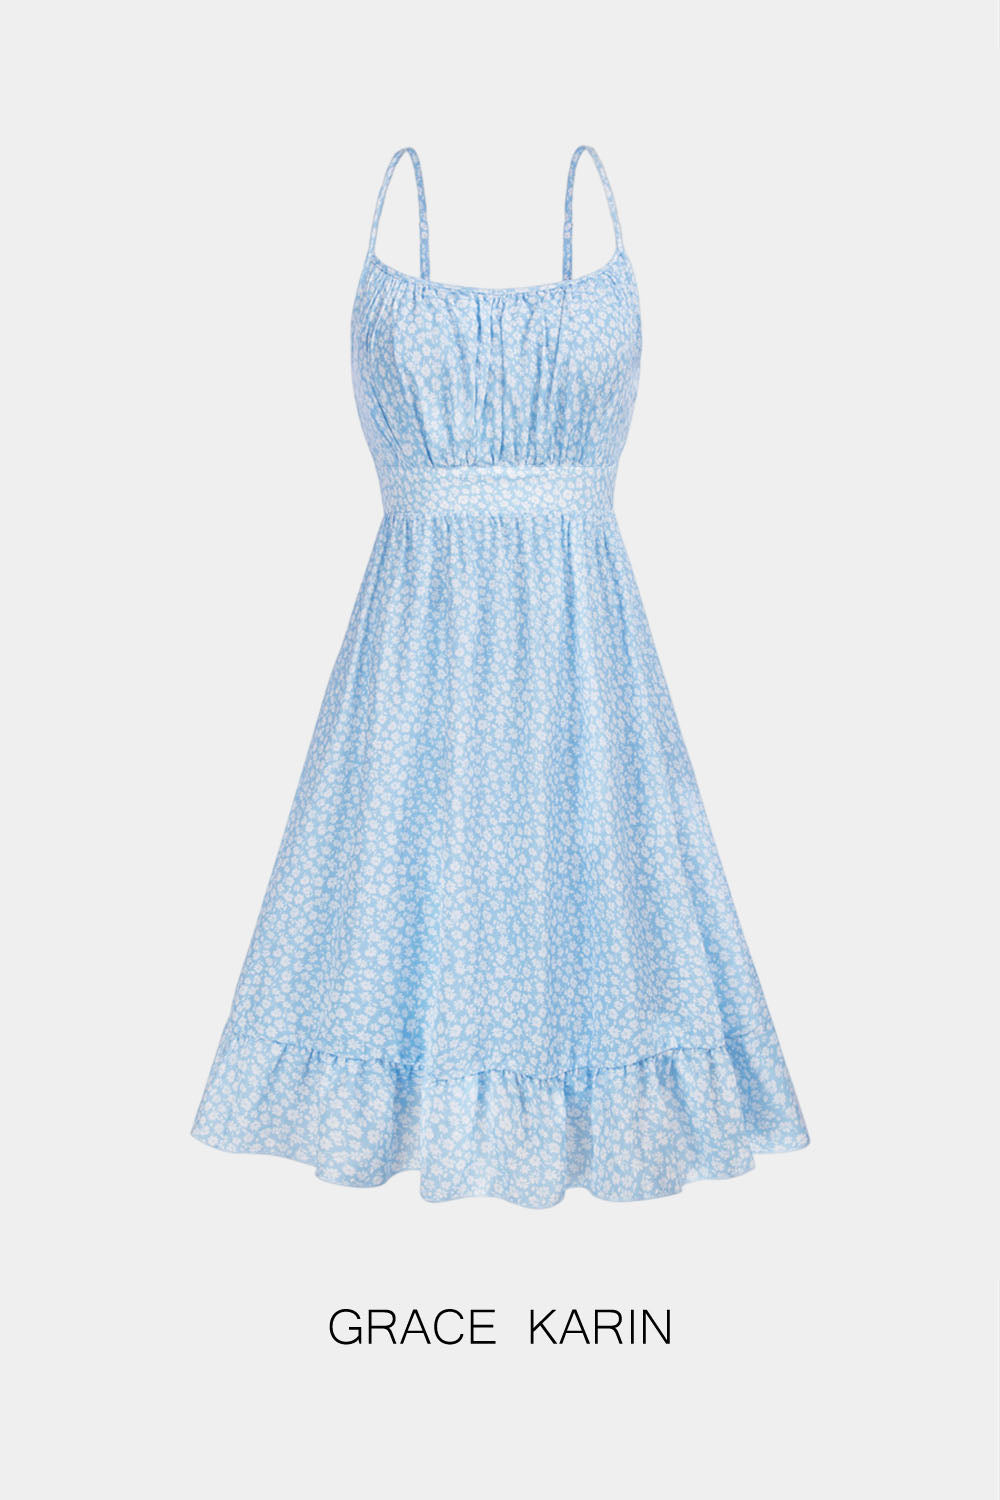 【Only $9.99】GRACE KARIN Women Defined Waist Cami Dress Spaghetti Straps Ruffled Hem A-Line Dress